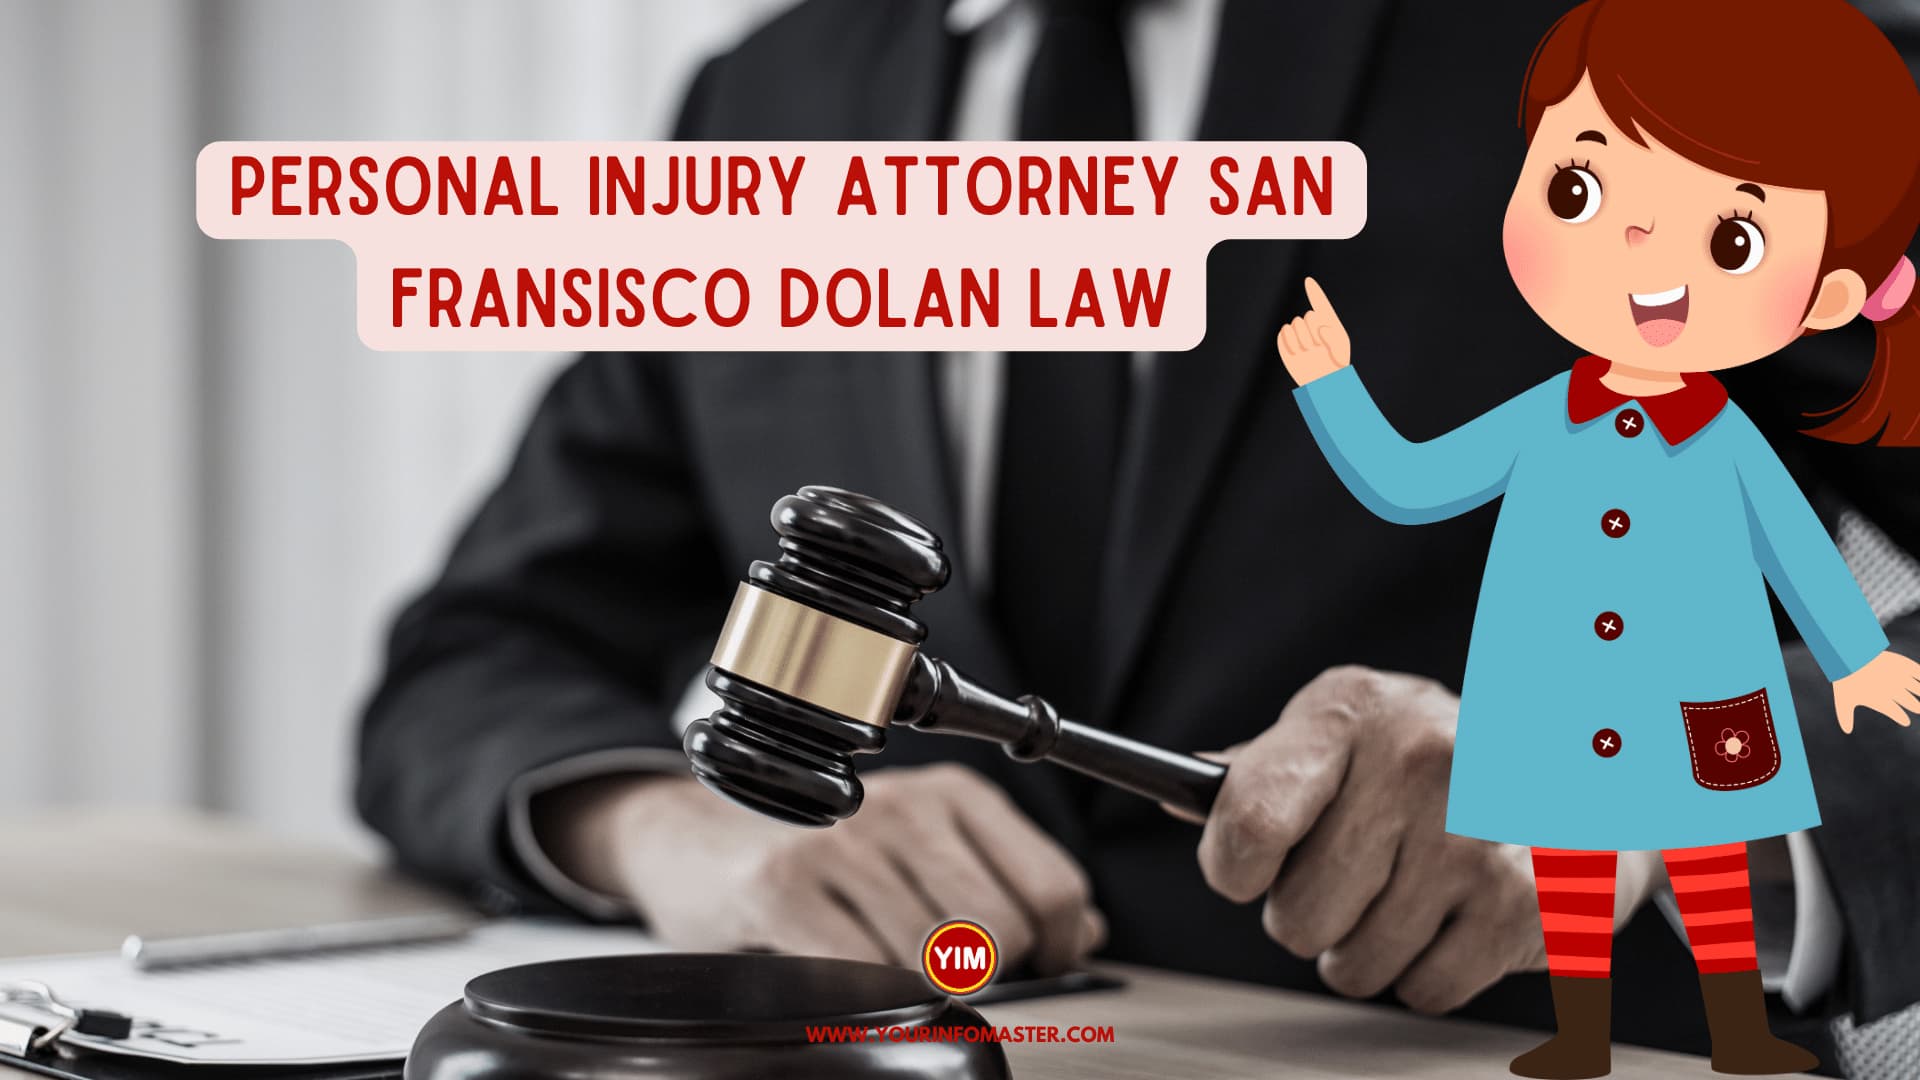 Personal injury attorney San Fransisco Dolan law